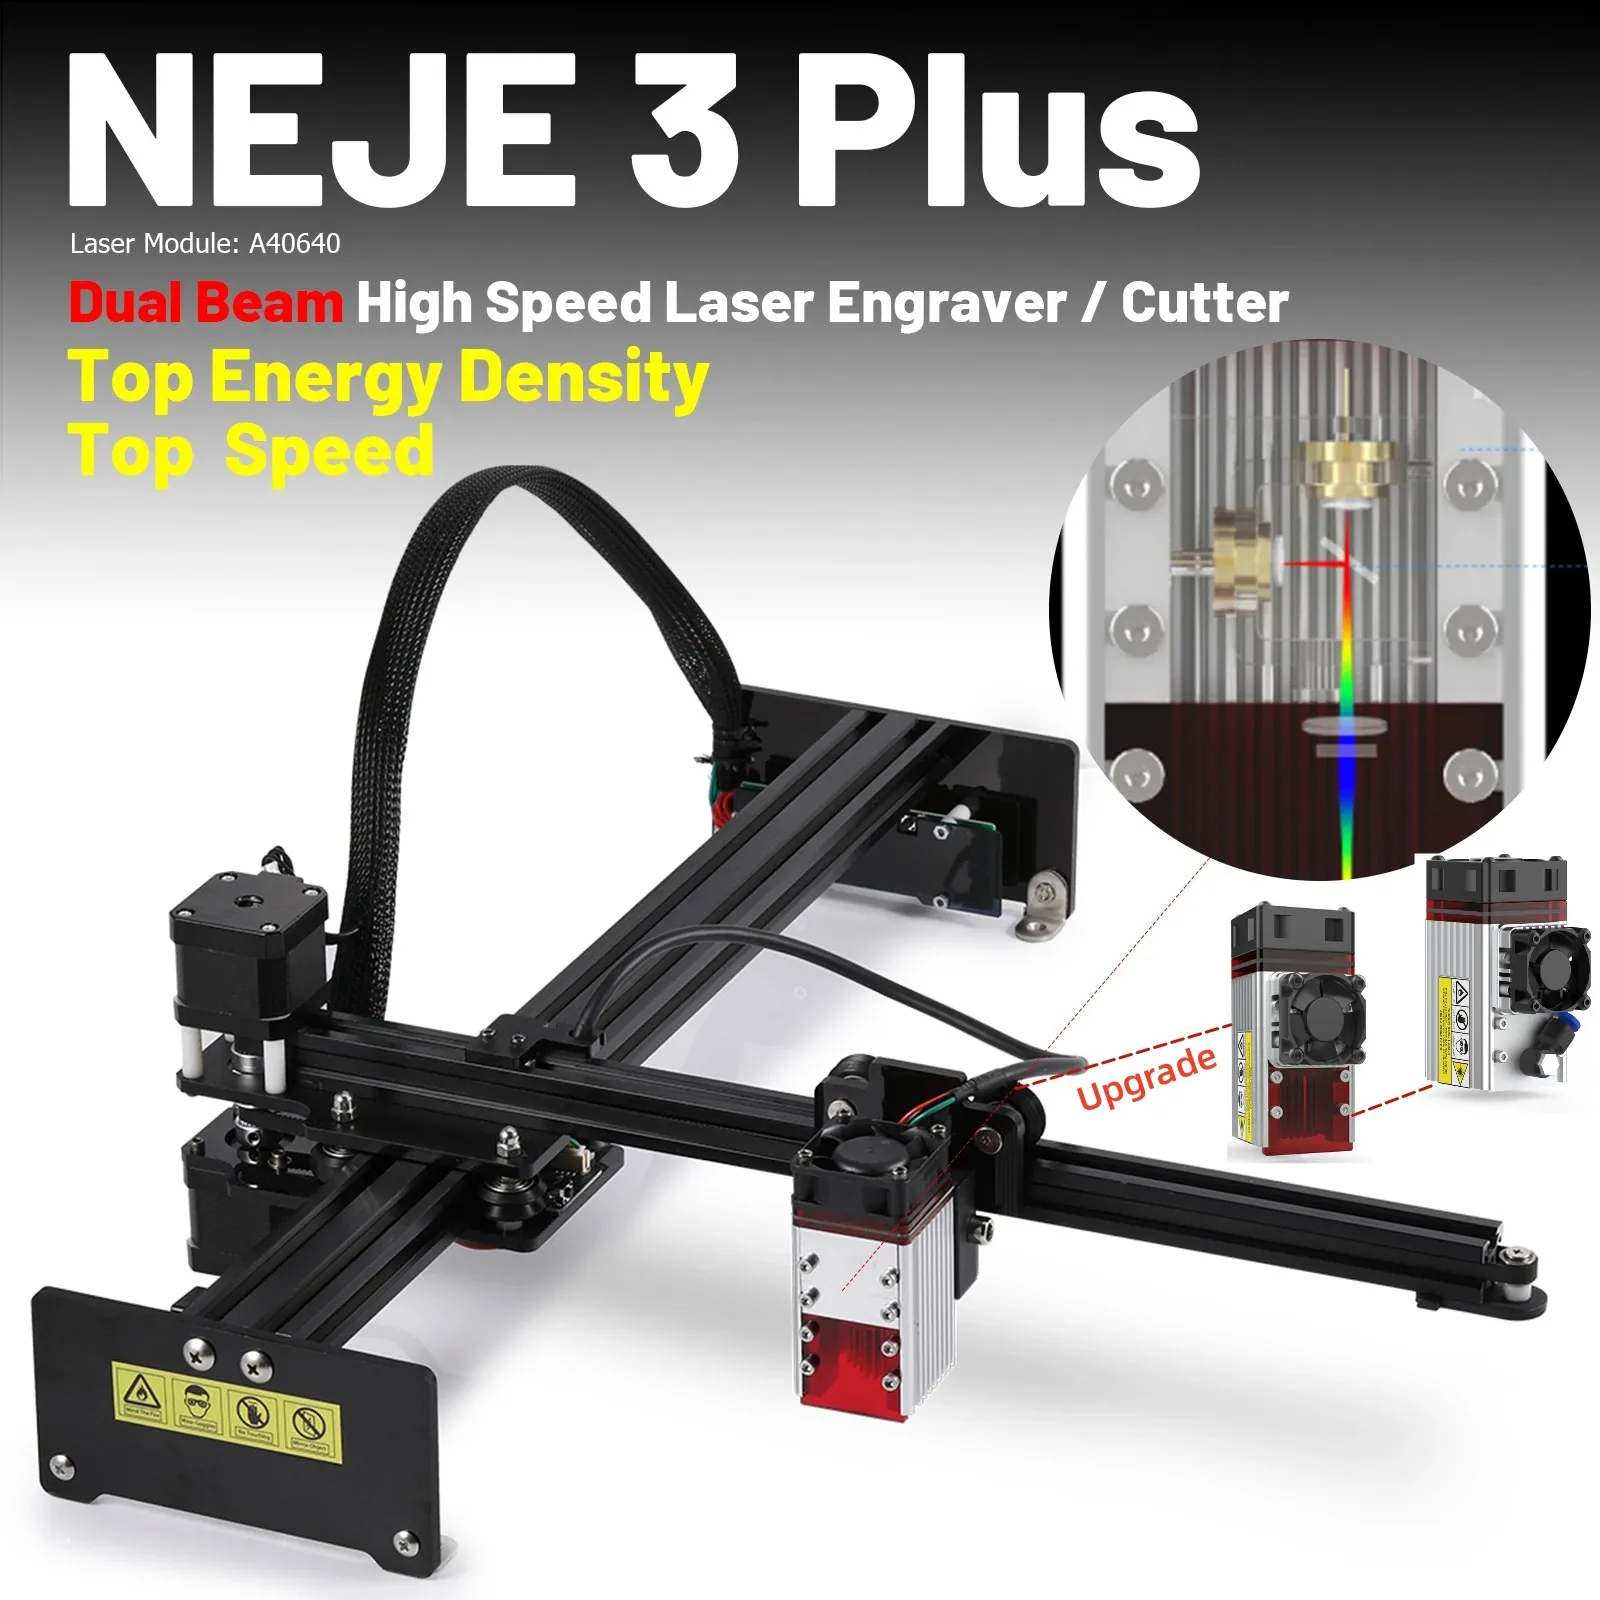 NEJE Master 3  Plus 80w 3 PLUS CNC Laser Engraver Cutter Engraving Machine Router Lightburn,App Control,Wood Milling Machine